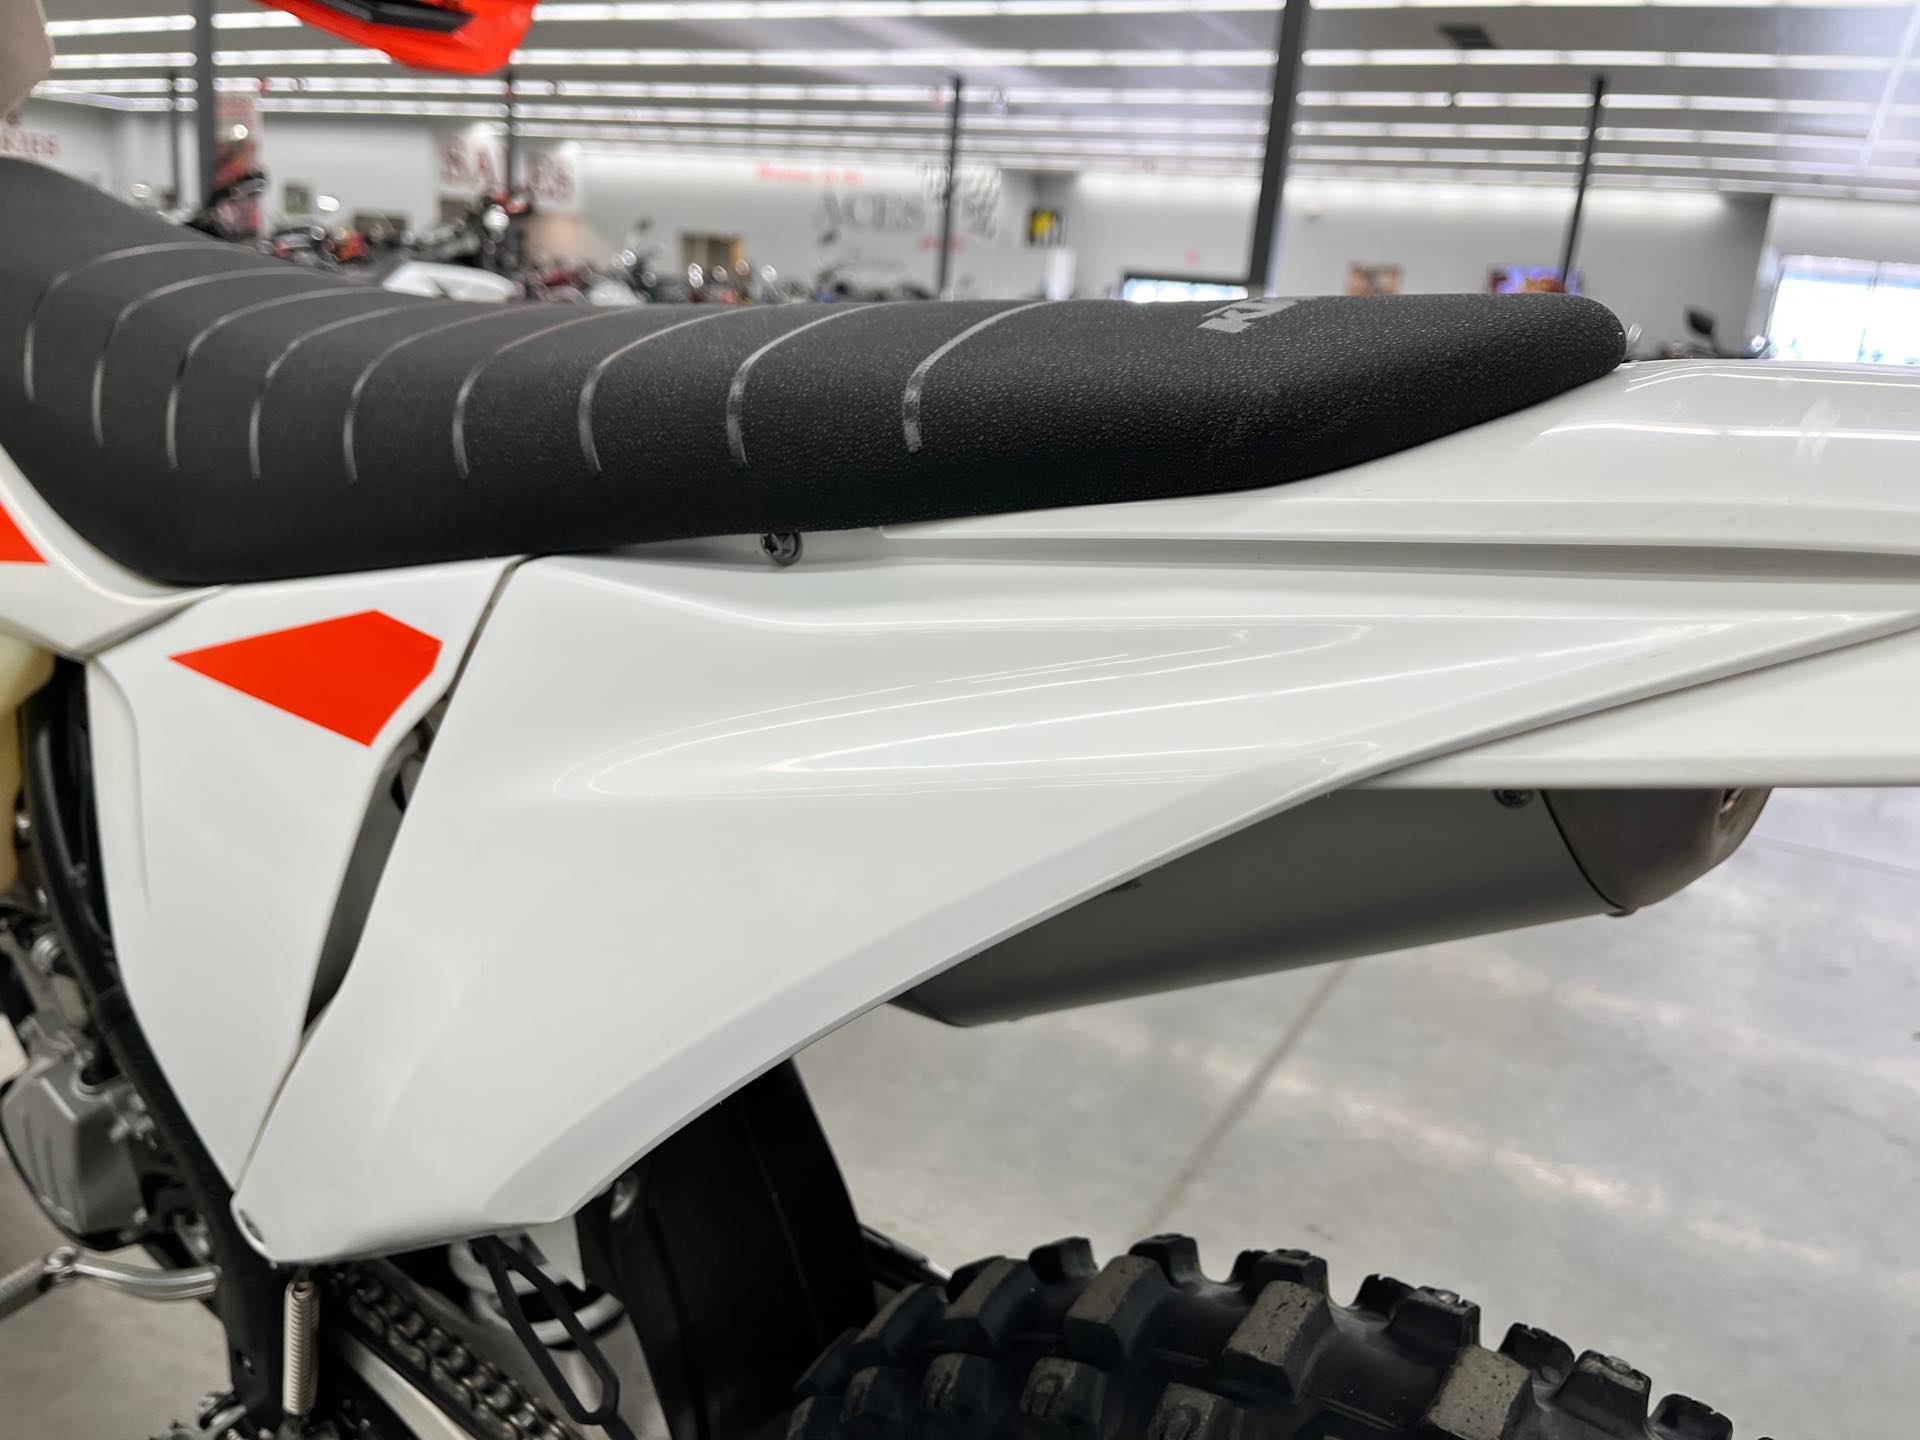 2019 KTM XC 450 F at Aces Motorcycles - Denver